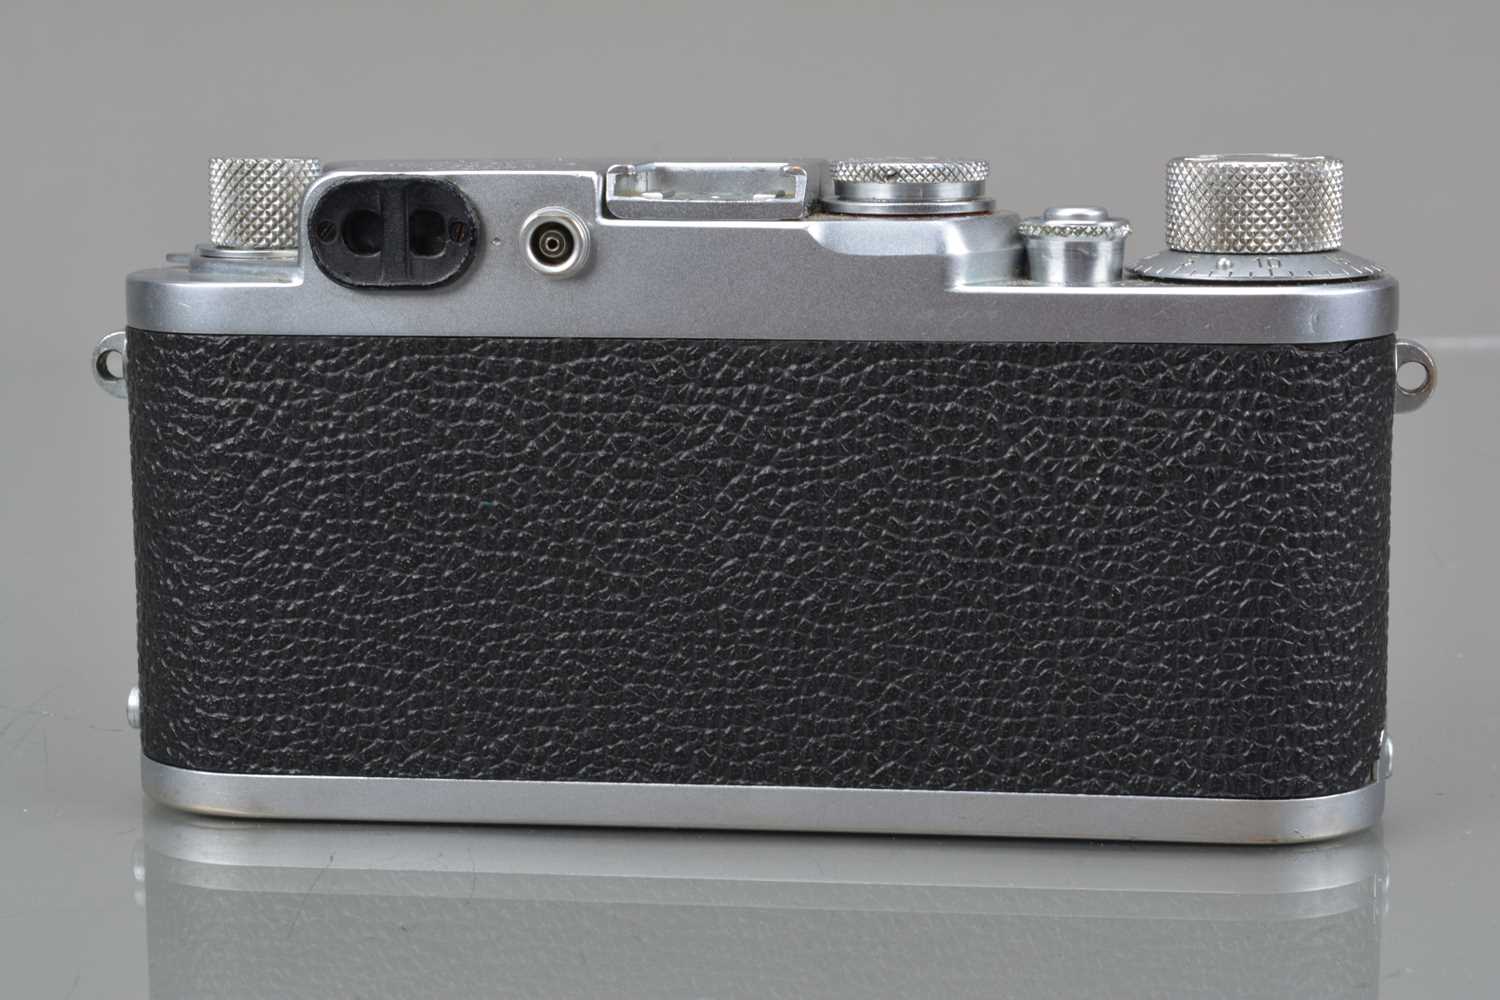 A Leitz Wetzlar Leica IIIf Rangefinder Camera, - Image 2 of 3